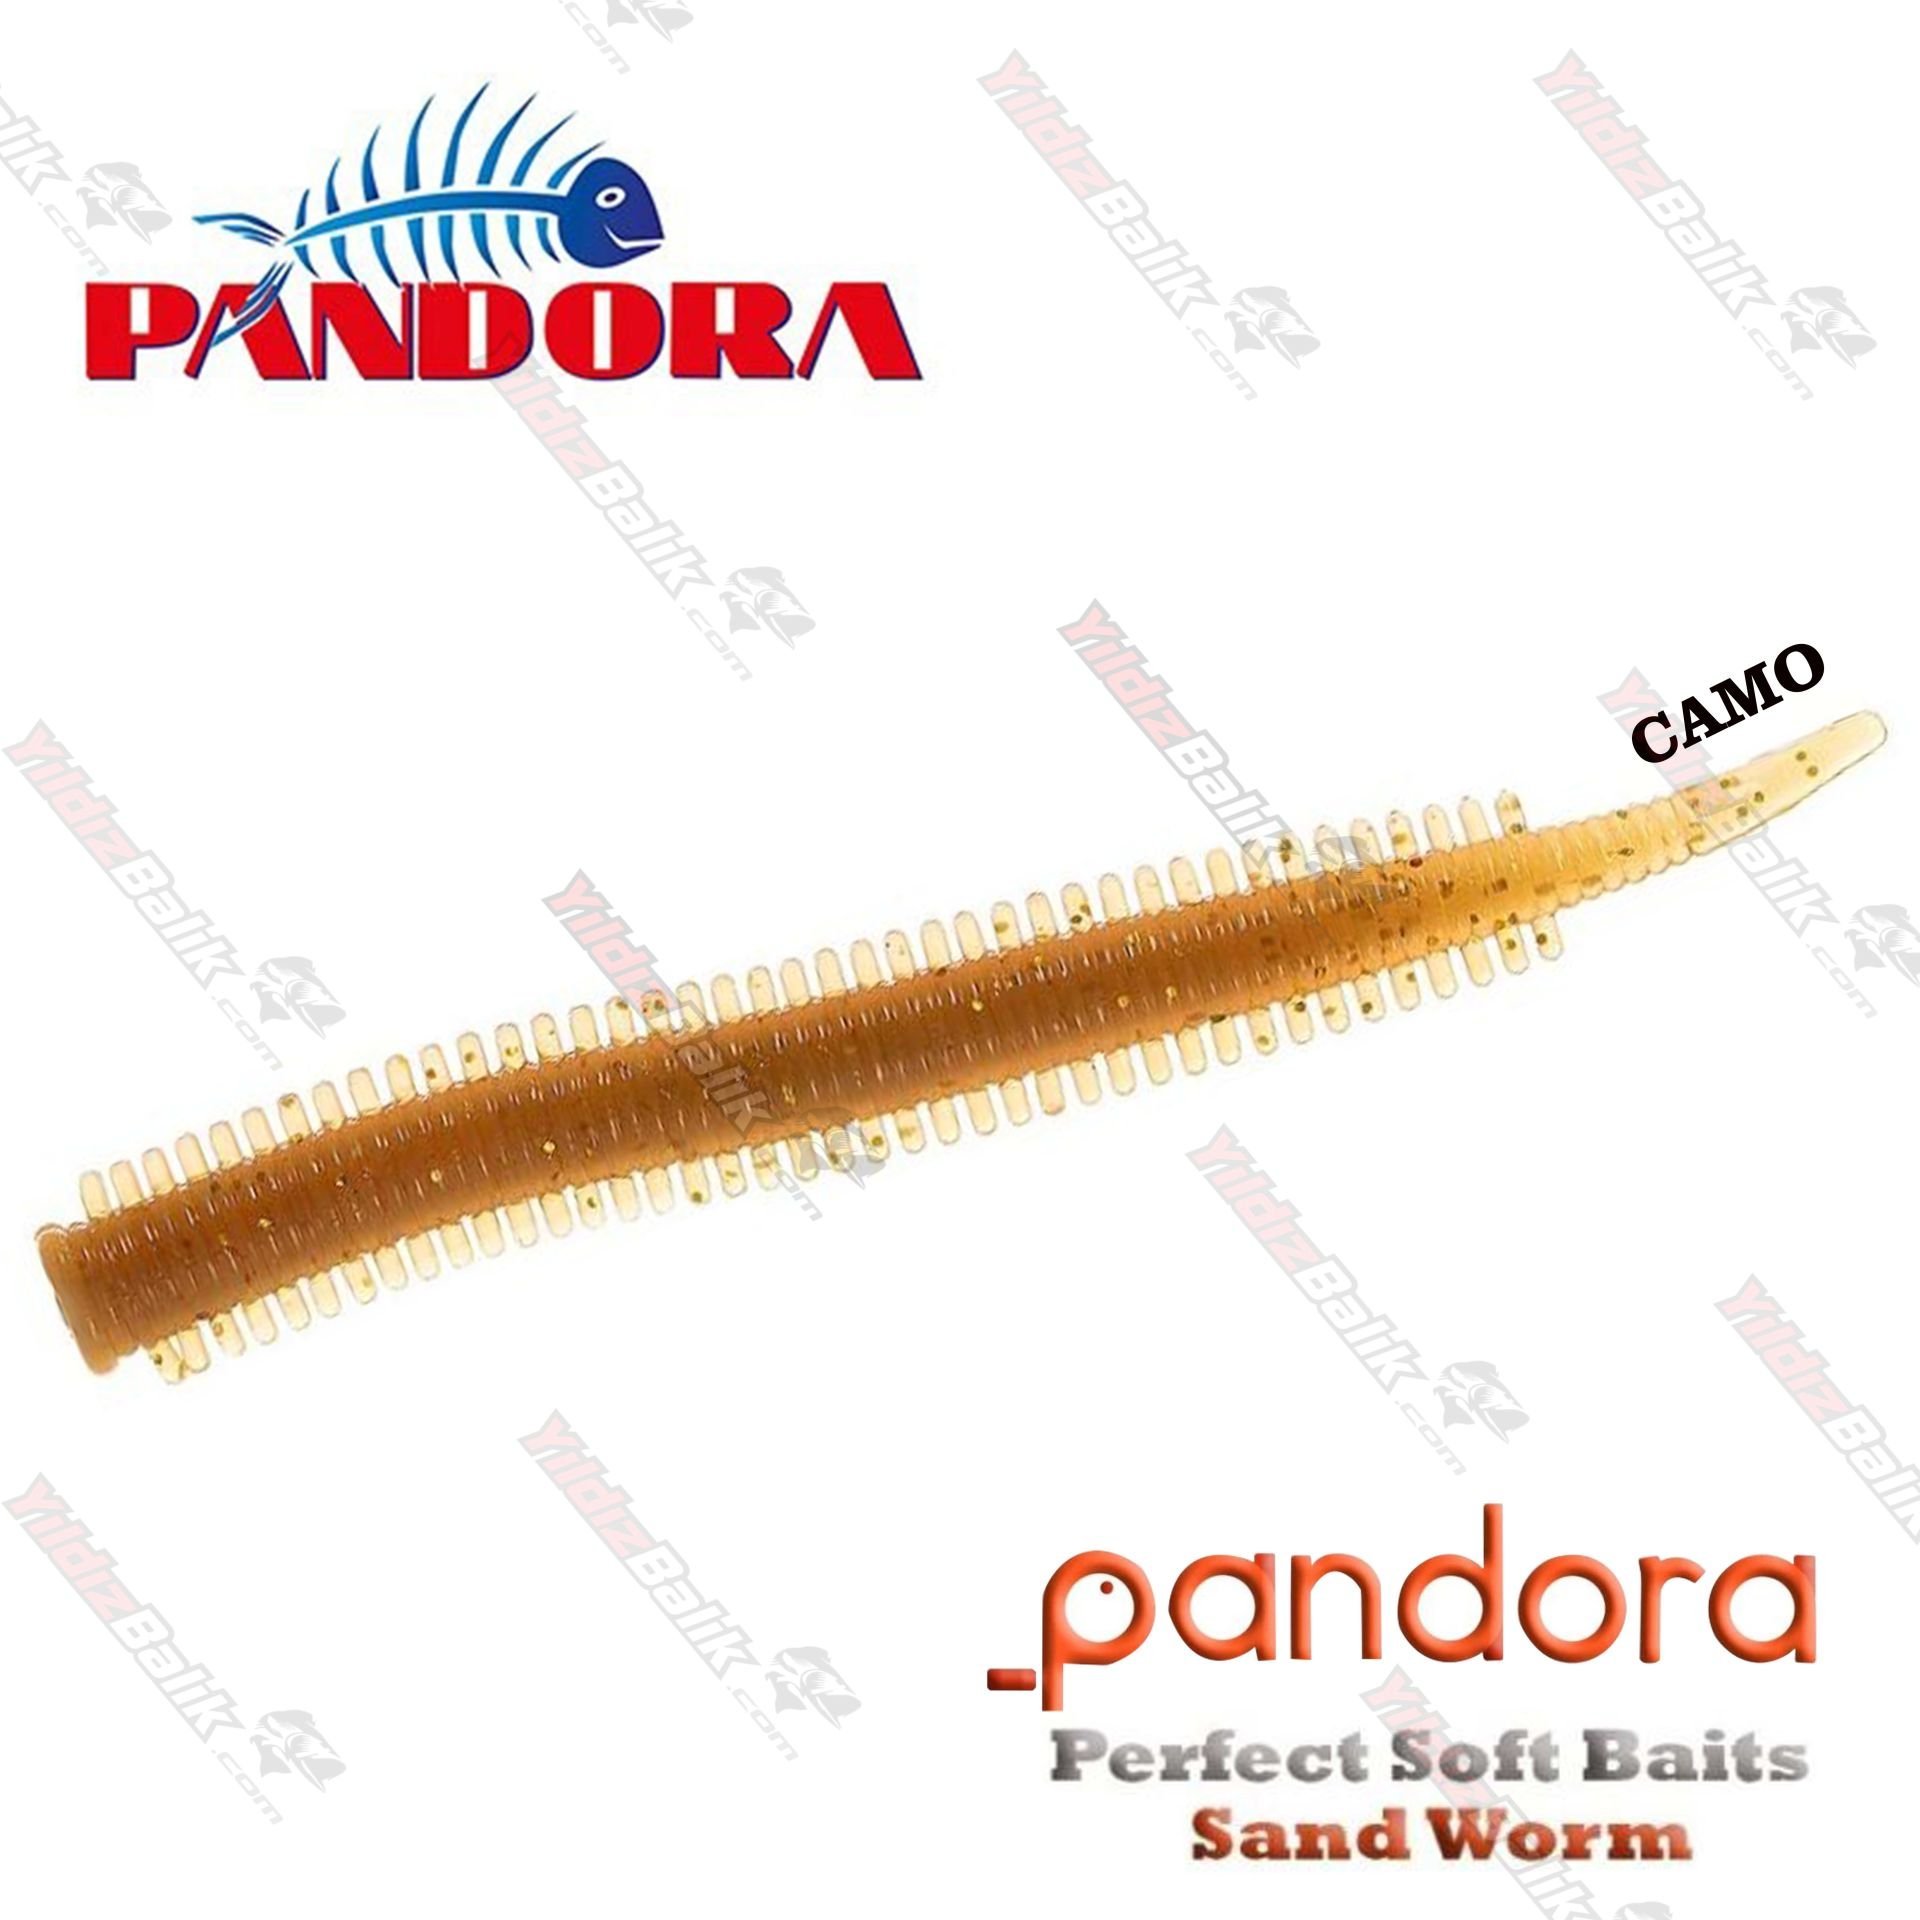 https://ideacdn.net/idea/as/57/myassets/products/790/pandora-perfect-soft-baits-sandworm-camo.jpg?revision=1697143329